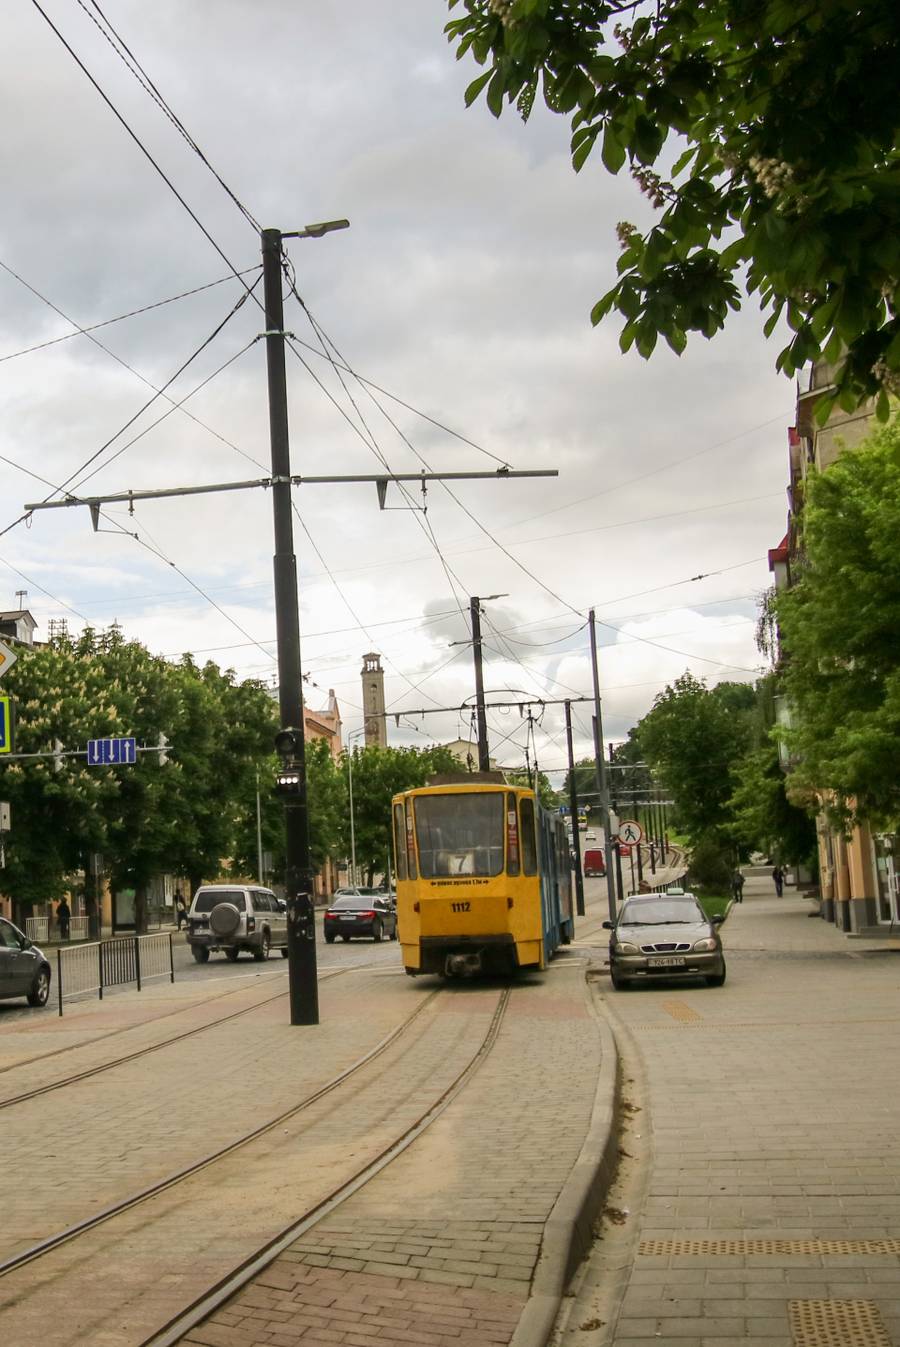 Tram in Lviv. Photo by Wander Spot Explore ©